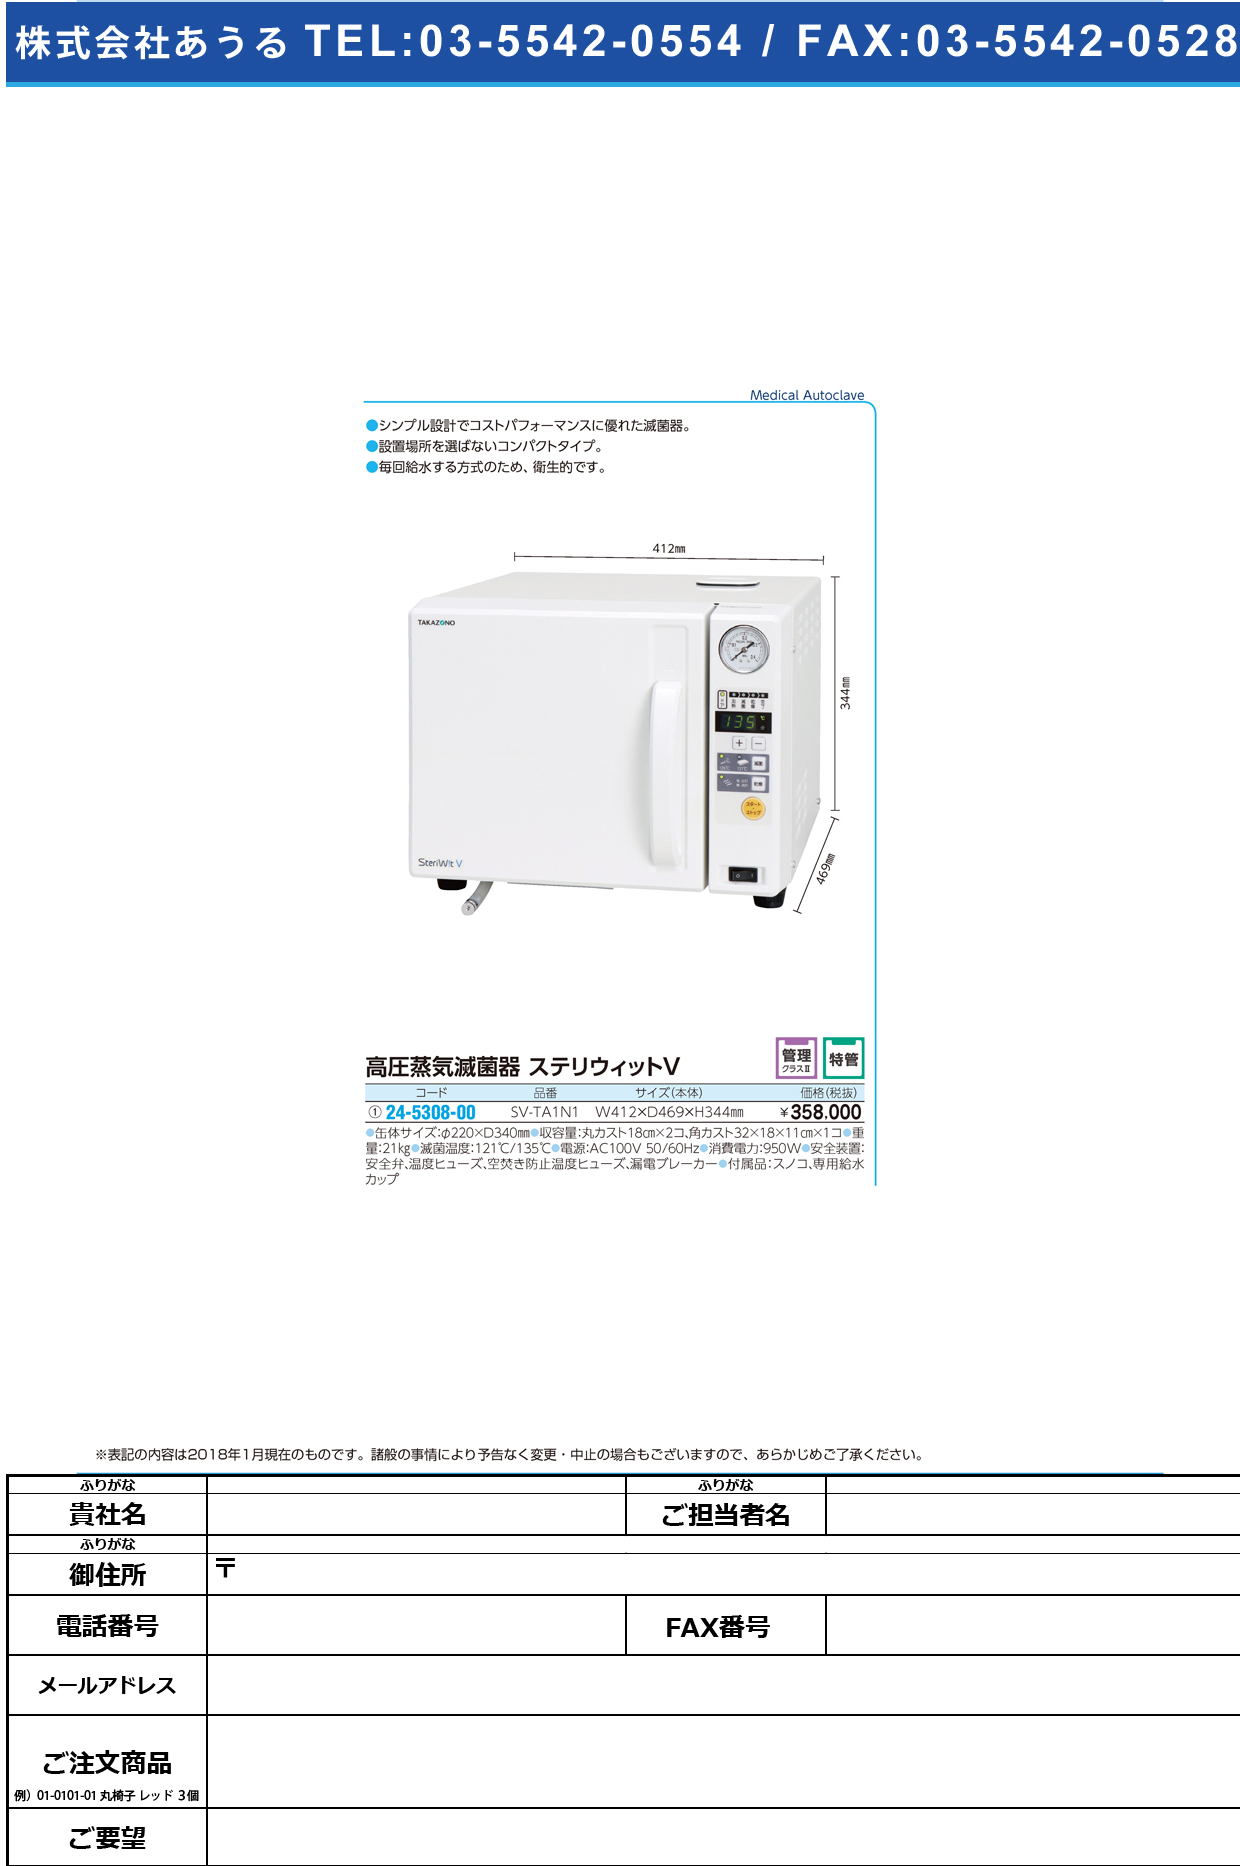 (24-5308-00)高圧蒸気滅菌器ステリウィットＶ SV-TA1N1 ｺｳｱﾂｼﾞｮｳｷﾒｯｷﾝｷｽﾃﾘｳｨｯ【1台単位】【2019年カタログ商品】